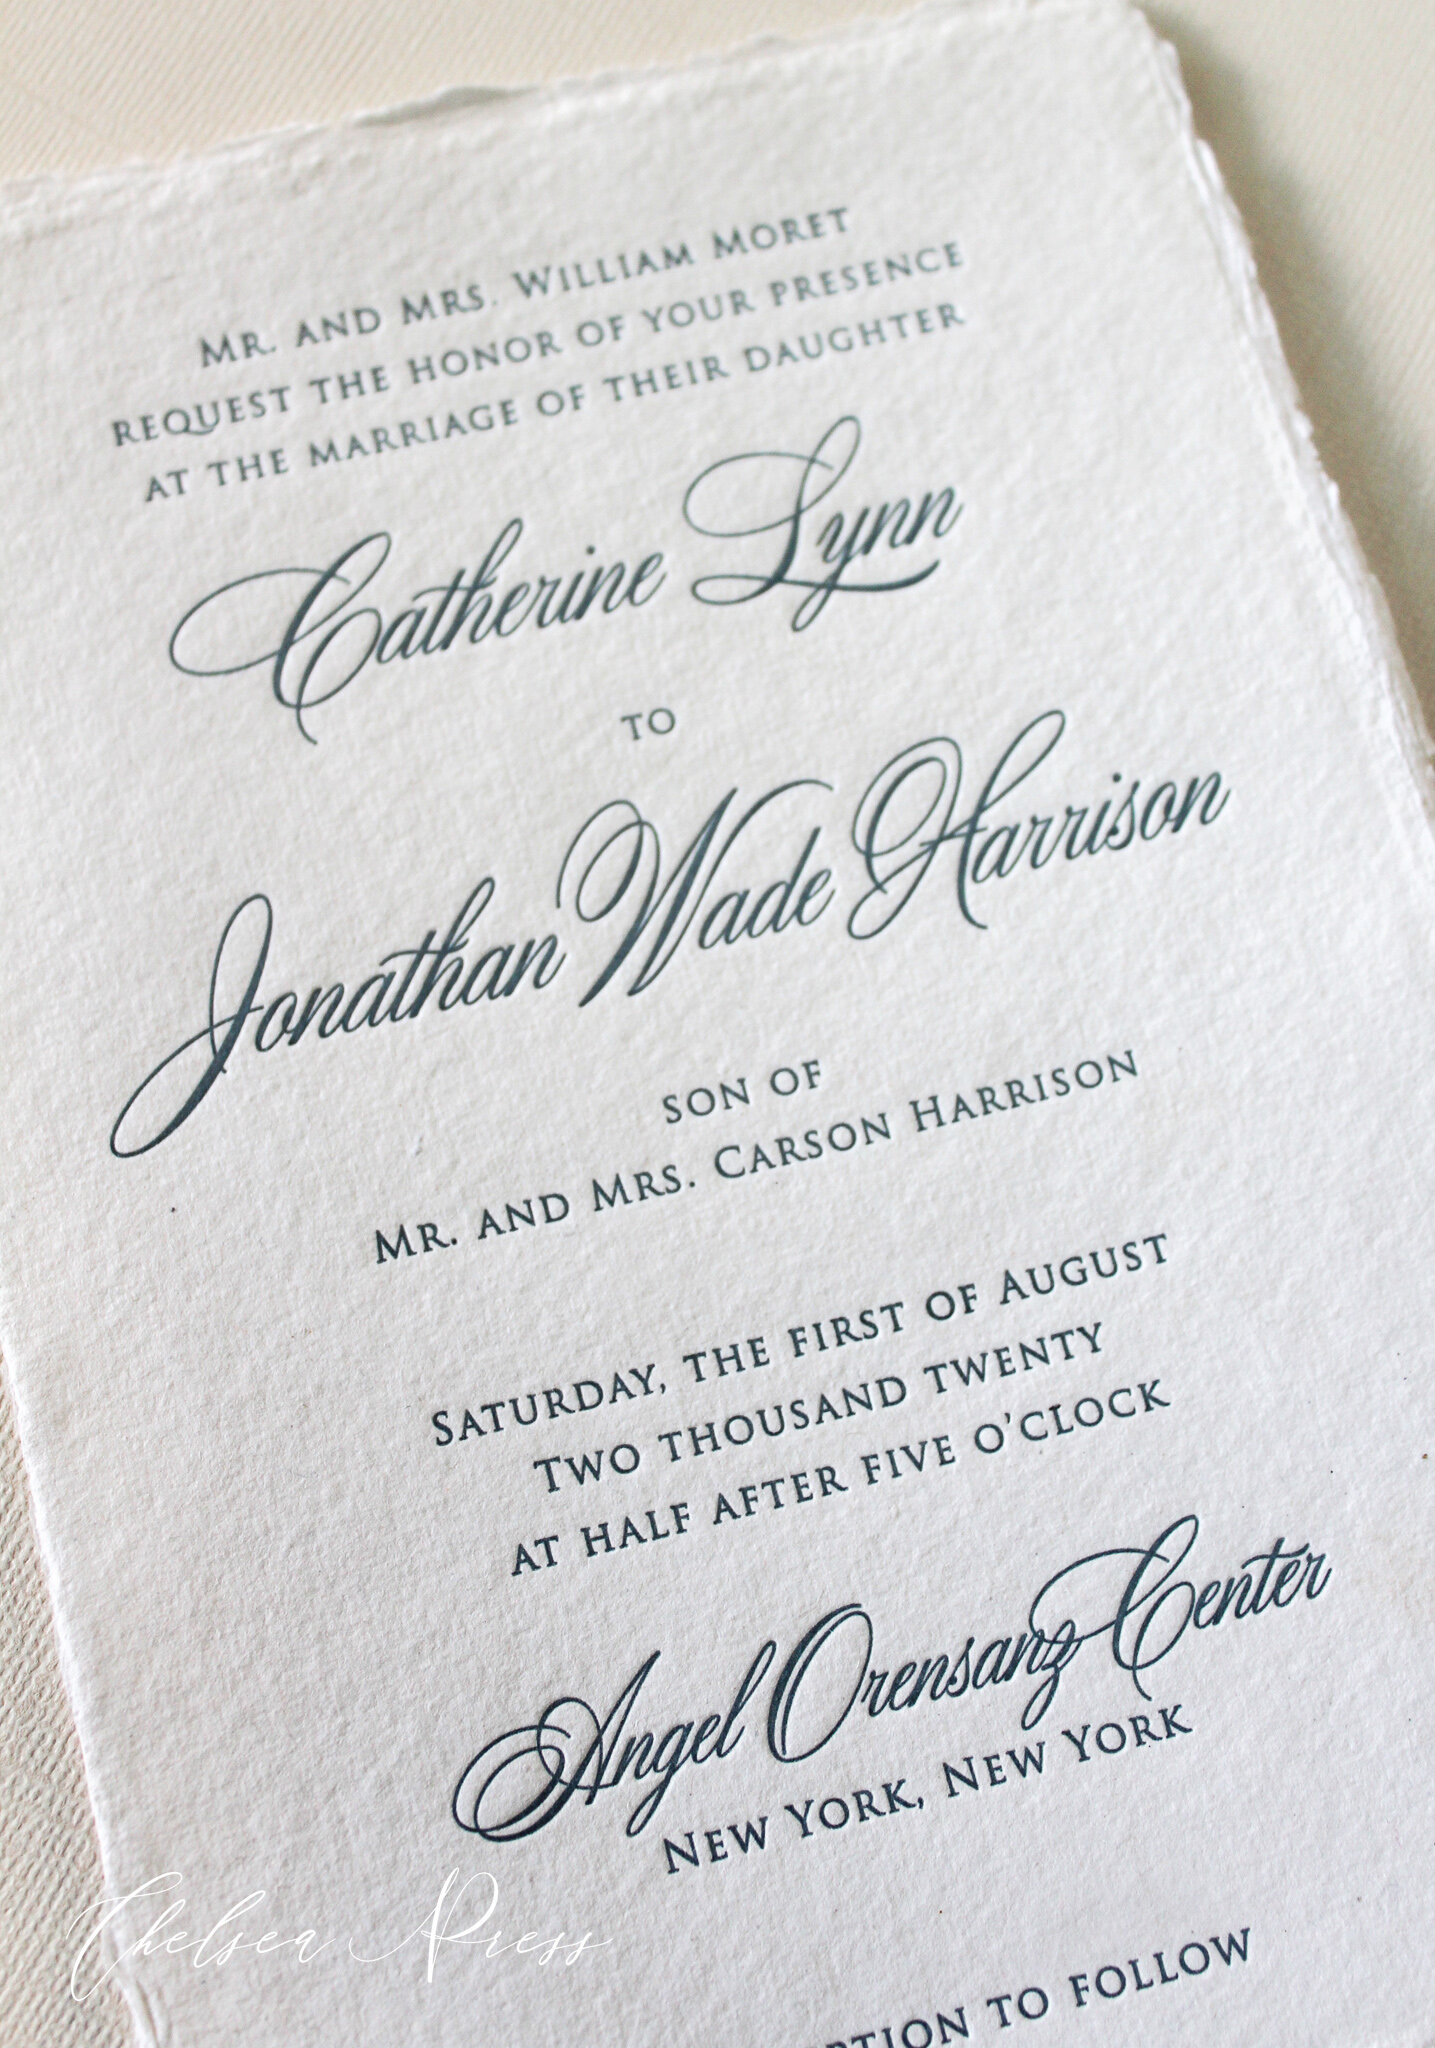 Chelsea Press Invitations-Catherine and Jonathan wedding invitation.jpg